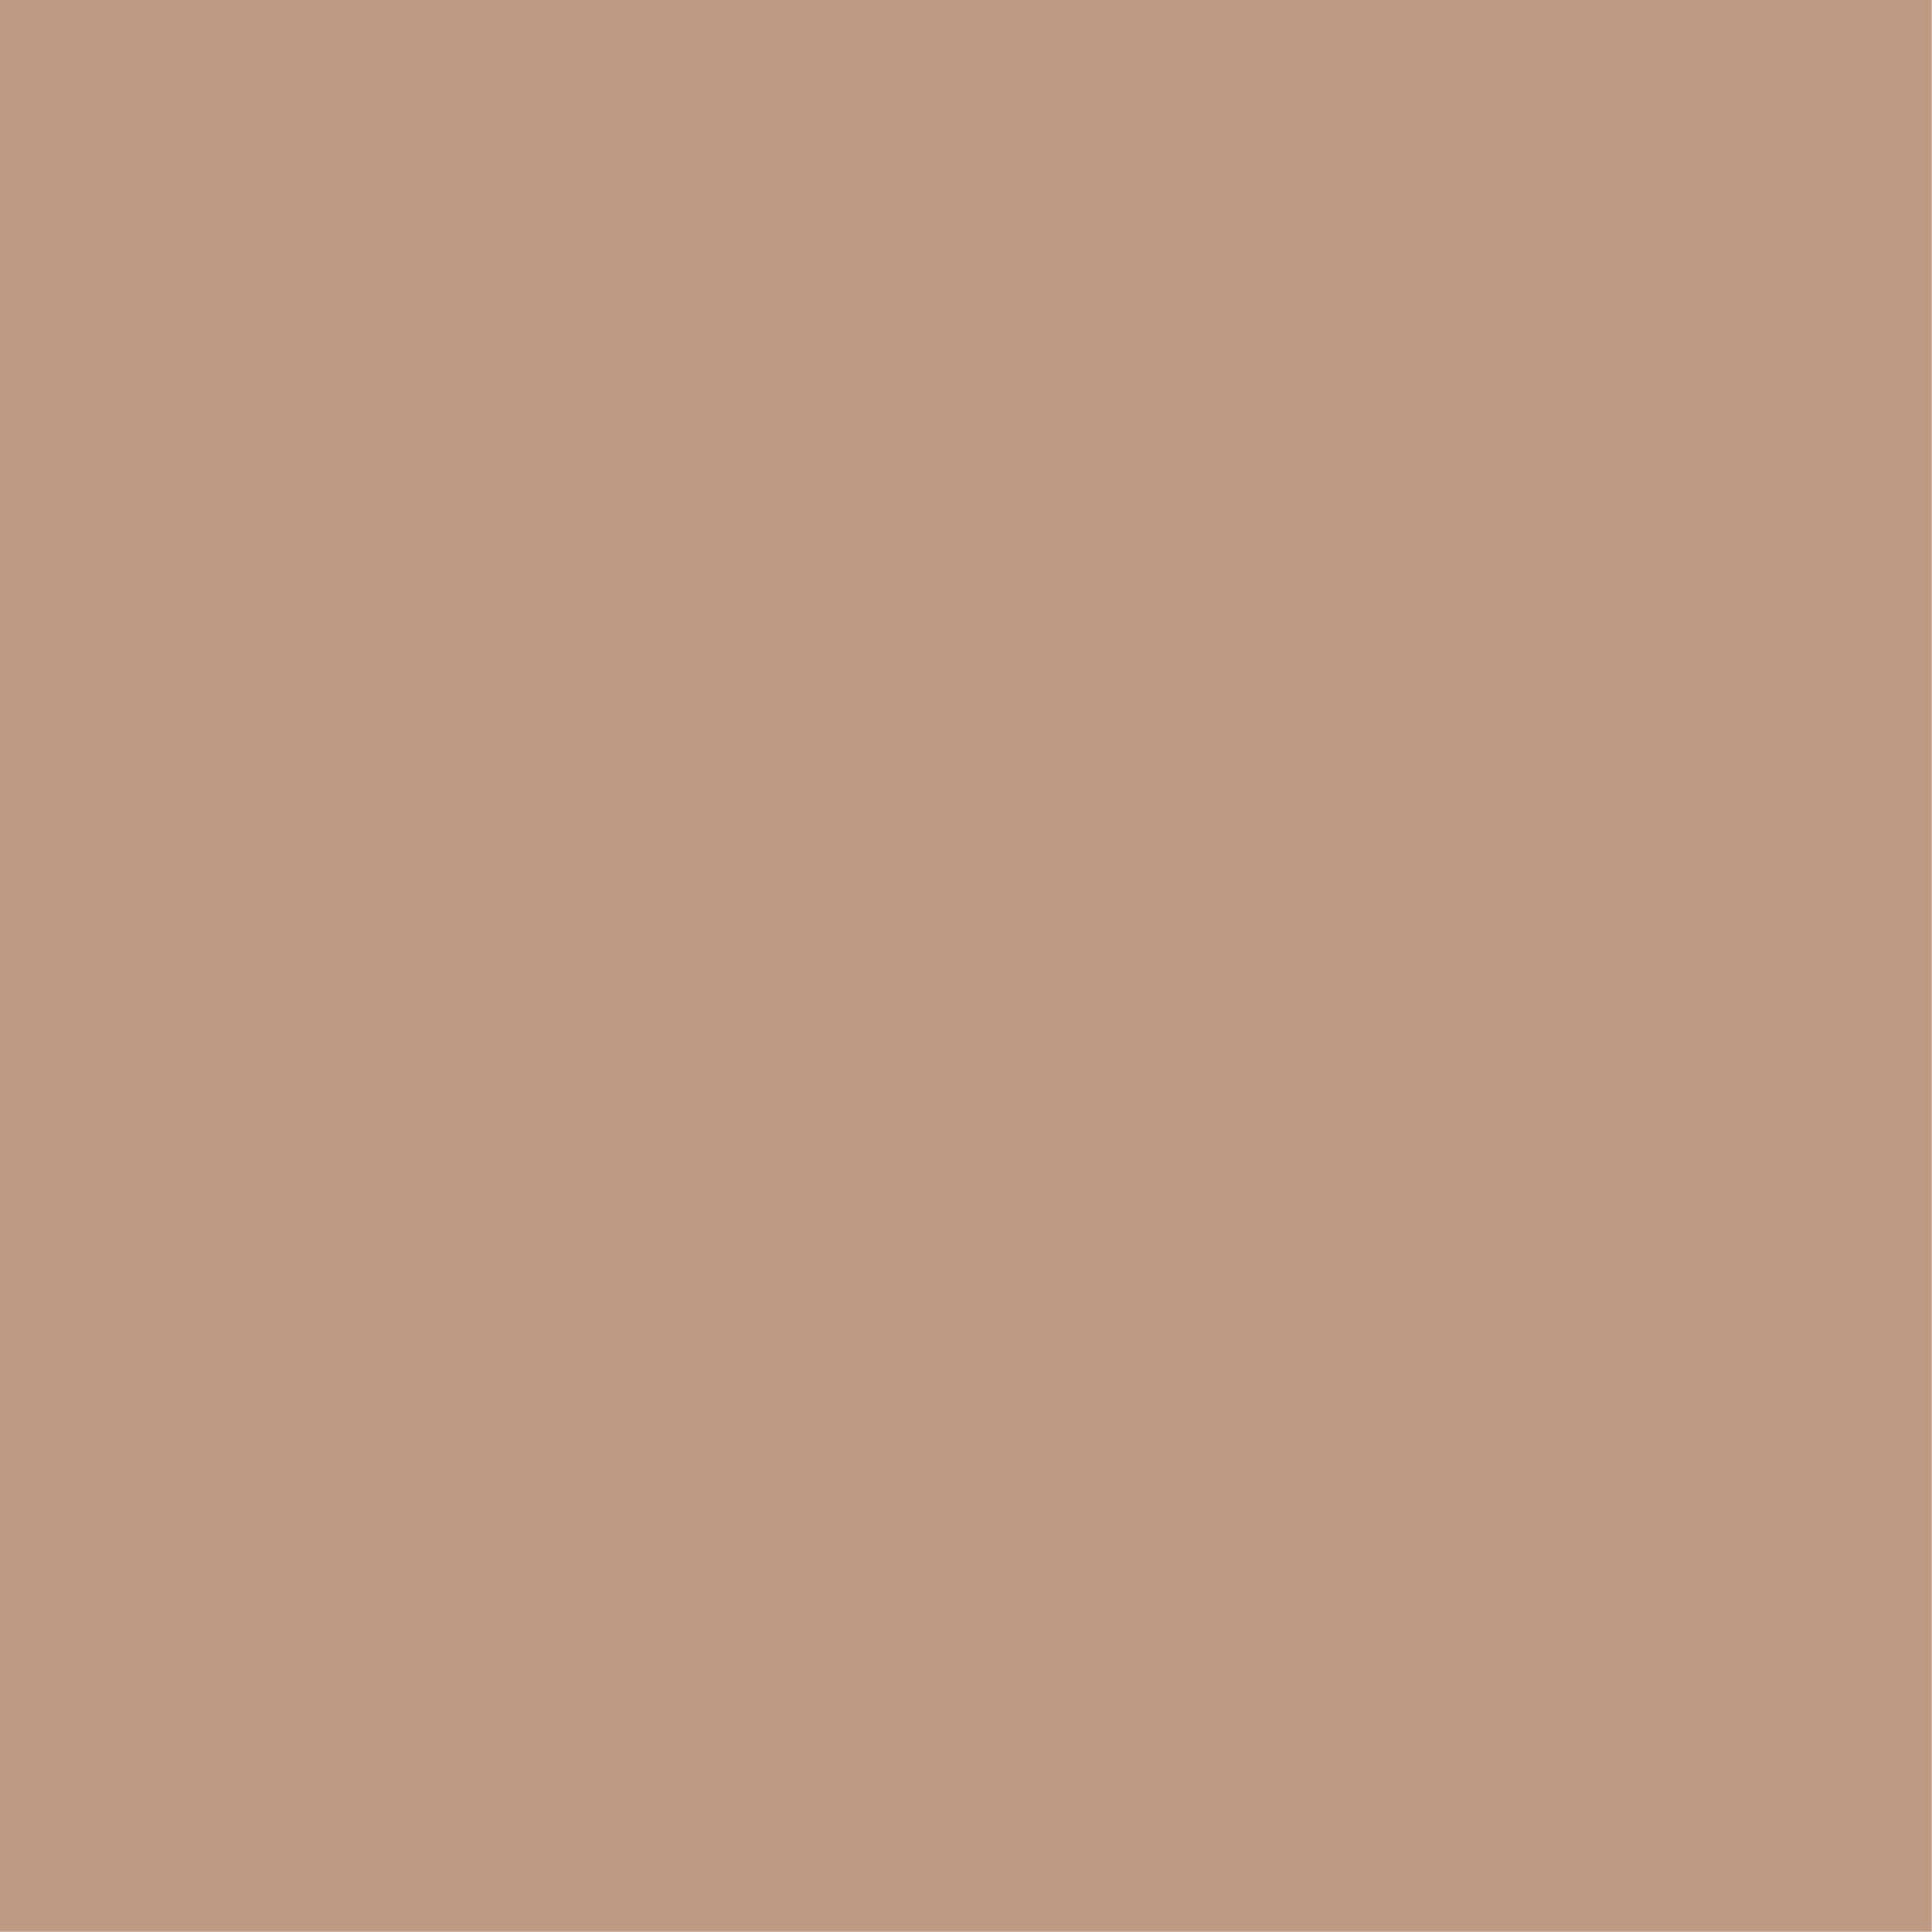 Pintura interior mate reveton pro 4l 3020-y60r marrón rojizo empolvado